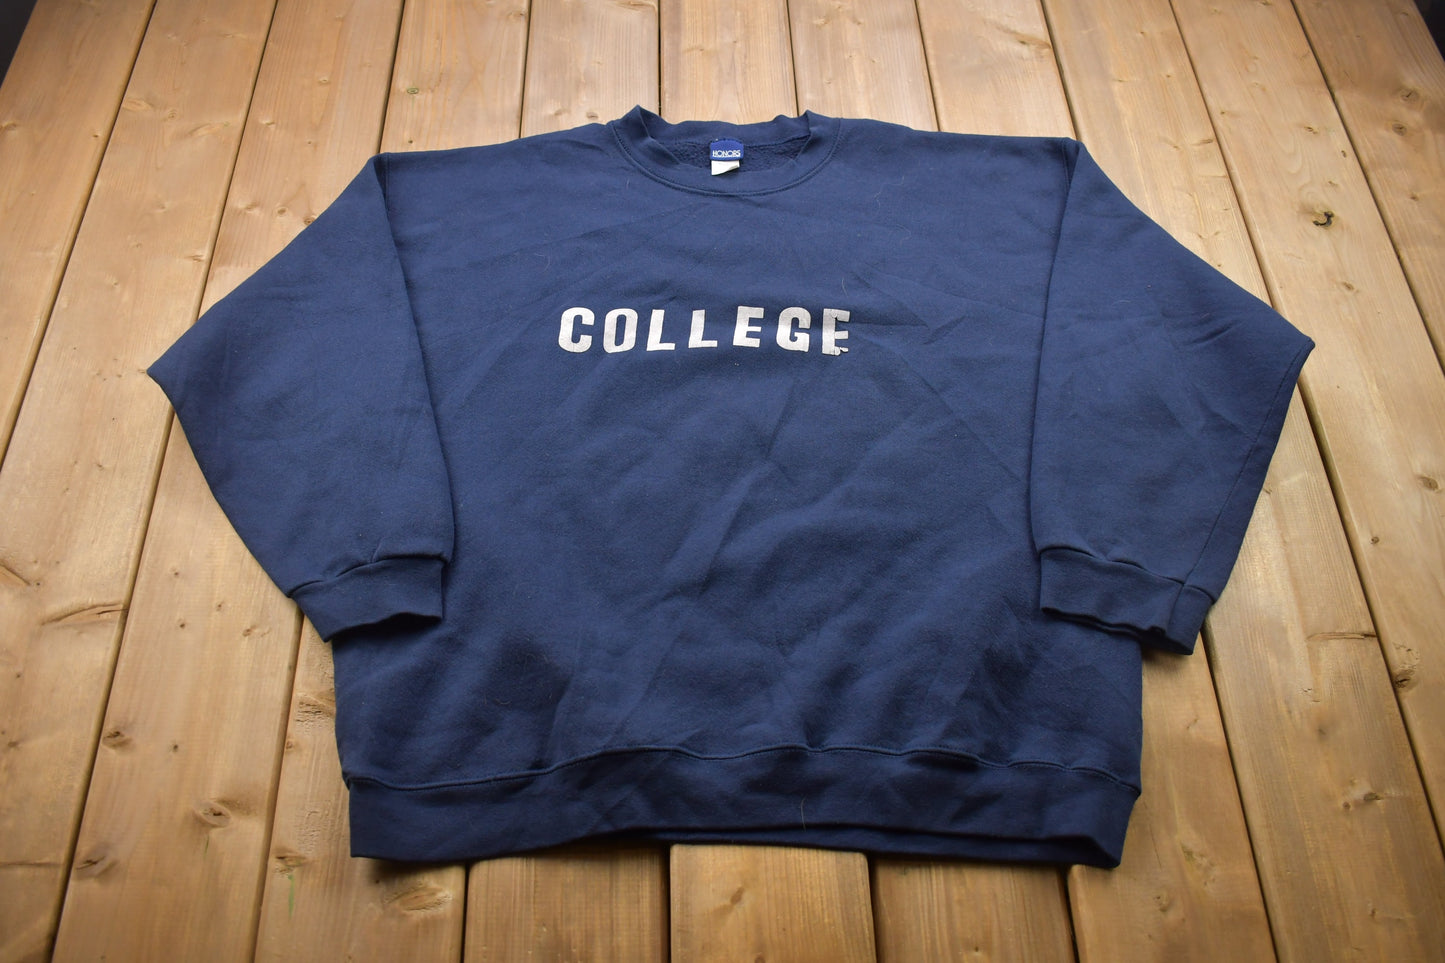 Vintage 1990s Honors College Crewneck Sweatshirt / Made in USA / 90s Crewneck / Athleisure / Streetwear / American Vintage / School